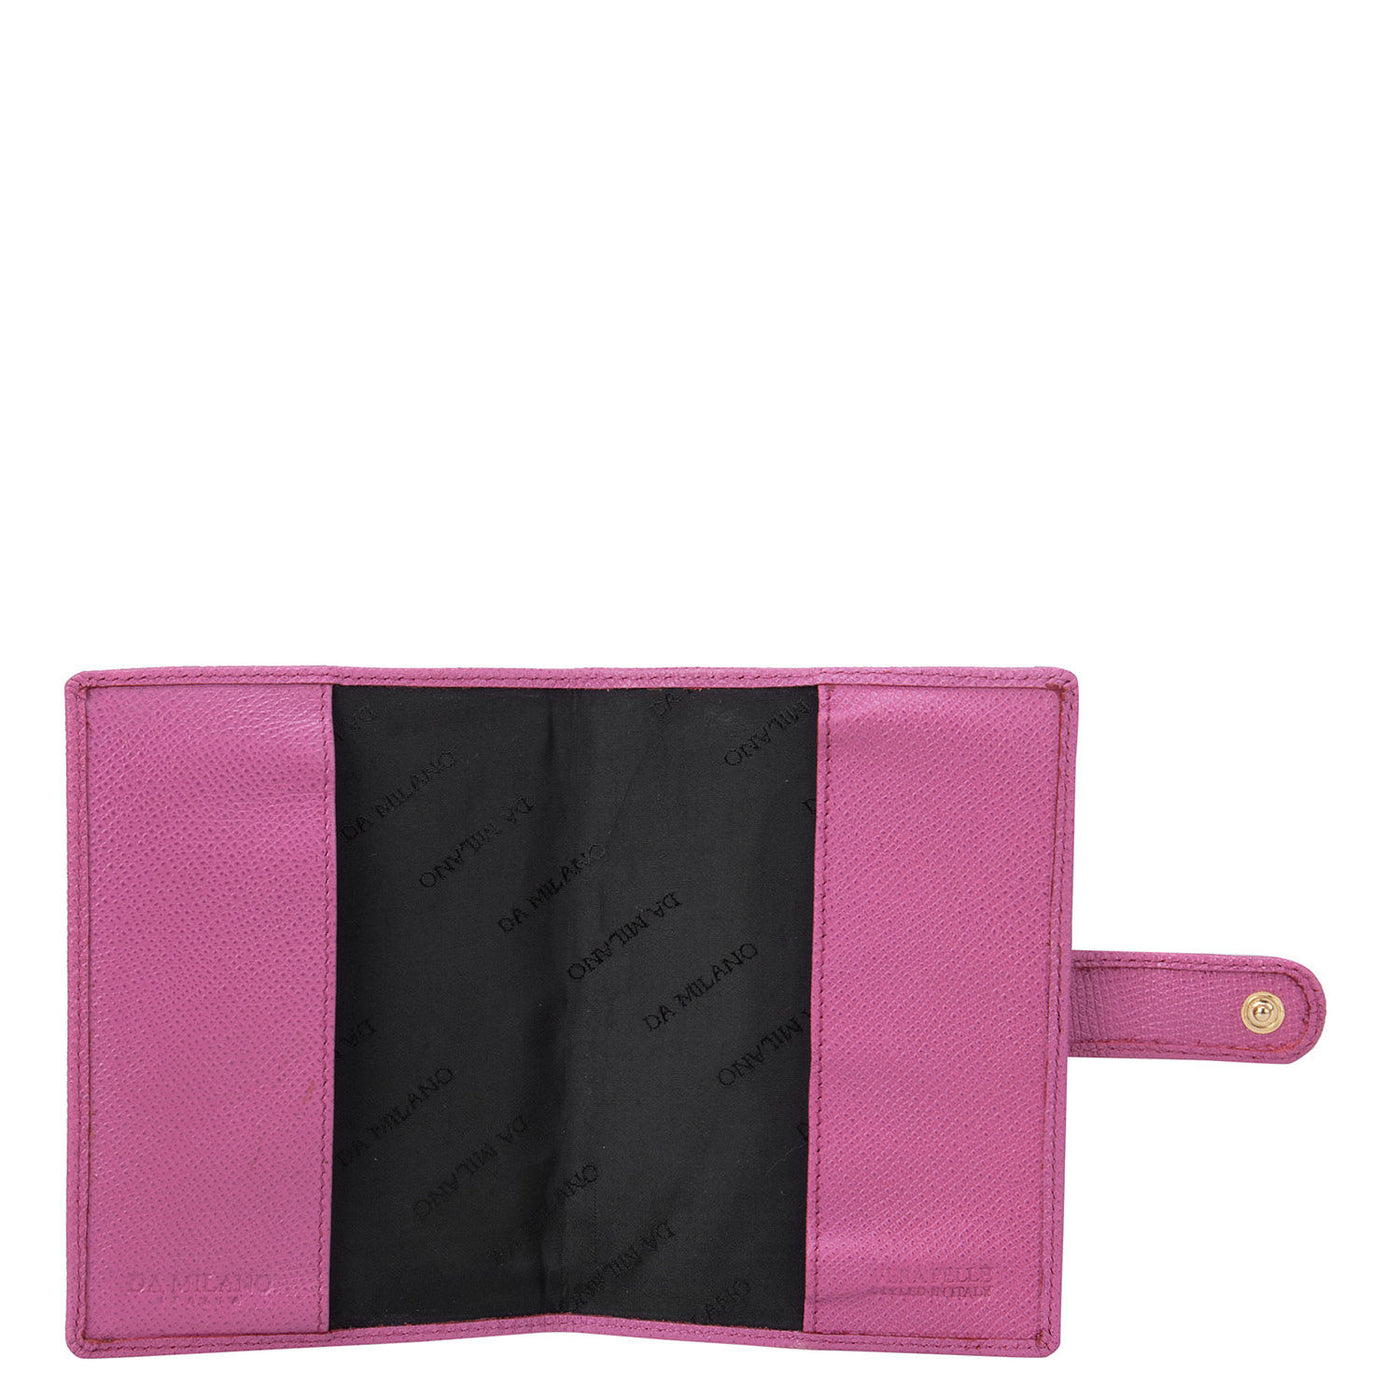 Franzy Leather Passport Case - Pink